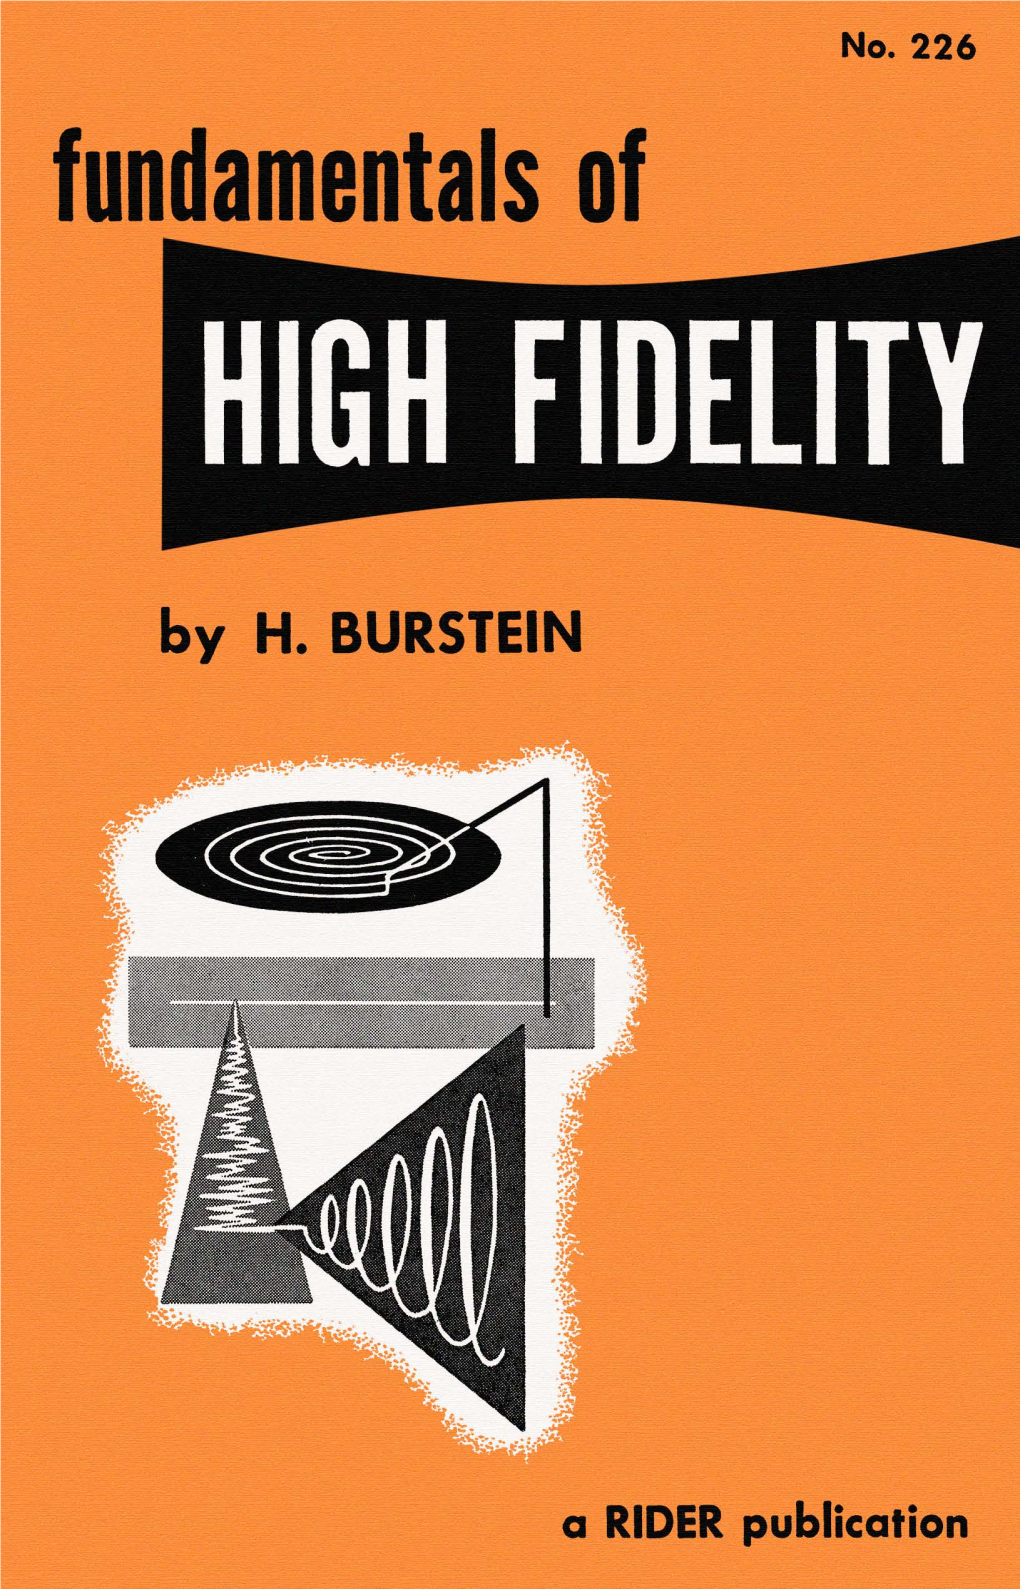 Fundamentals of HIGH FIDELITY